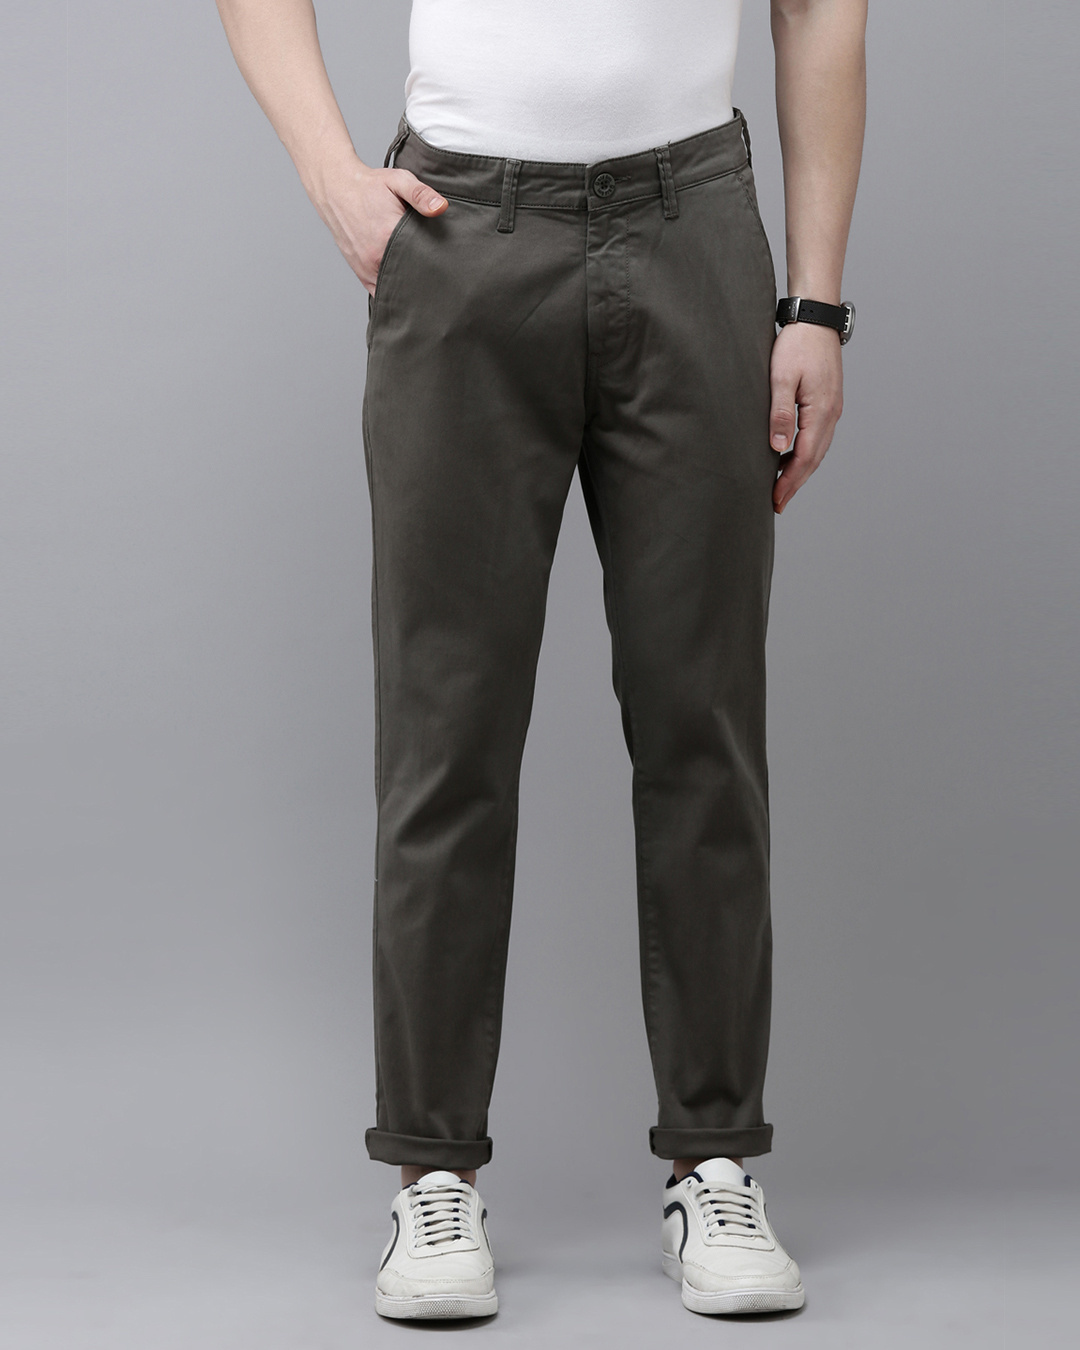 Buy Men's Olive Green Slim Fit Trousers Online at Bewakoof